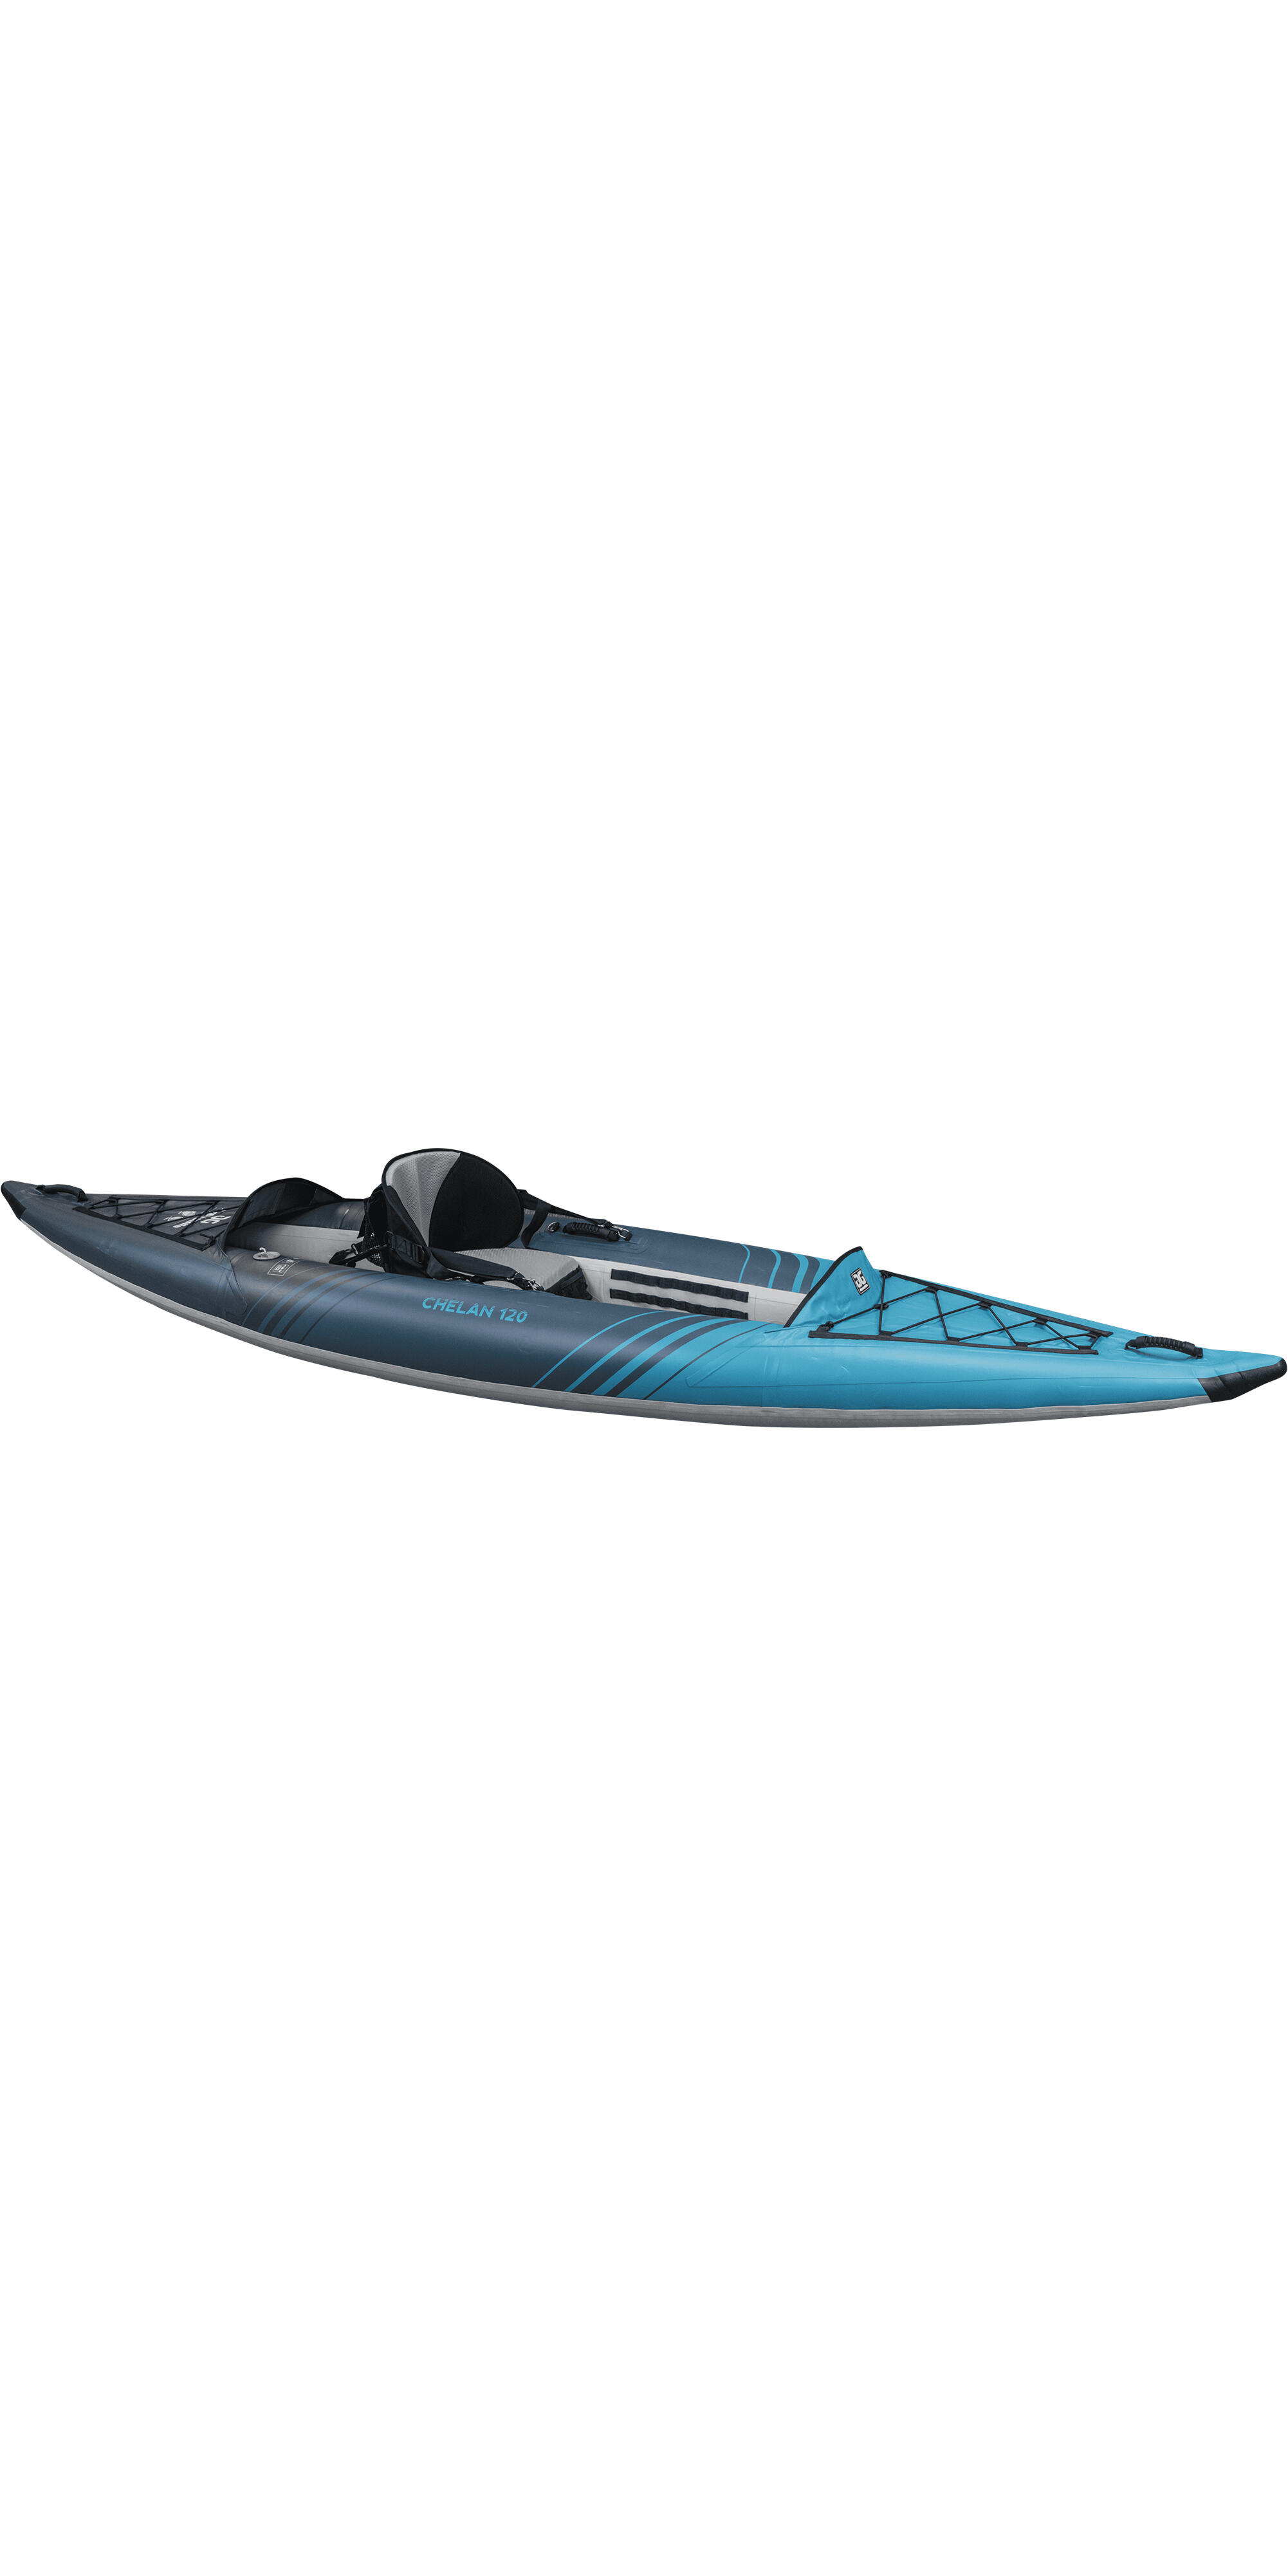 Chelan 120 1 Person Inflatable Kayak 2/5